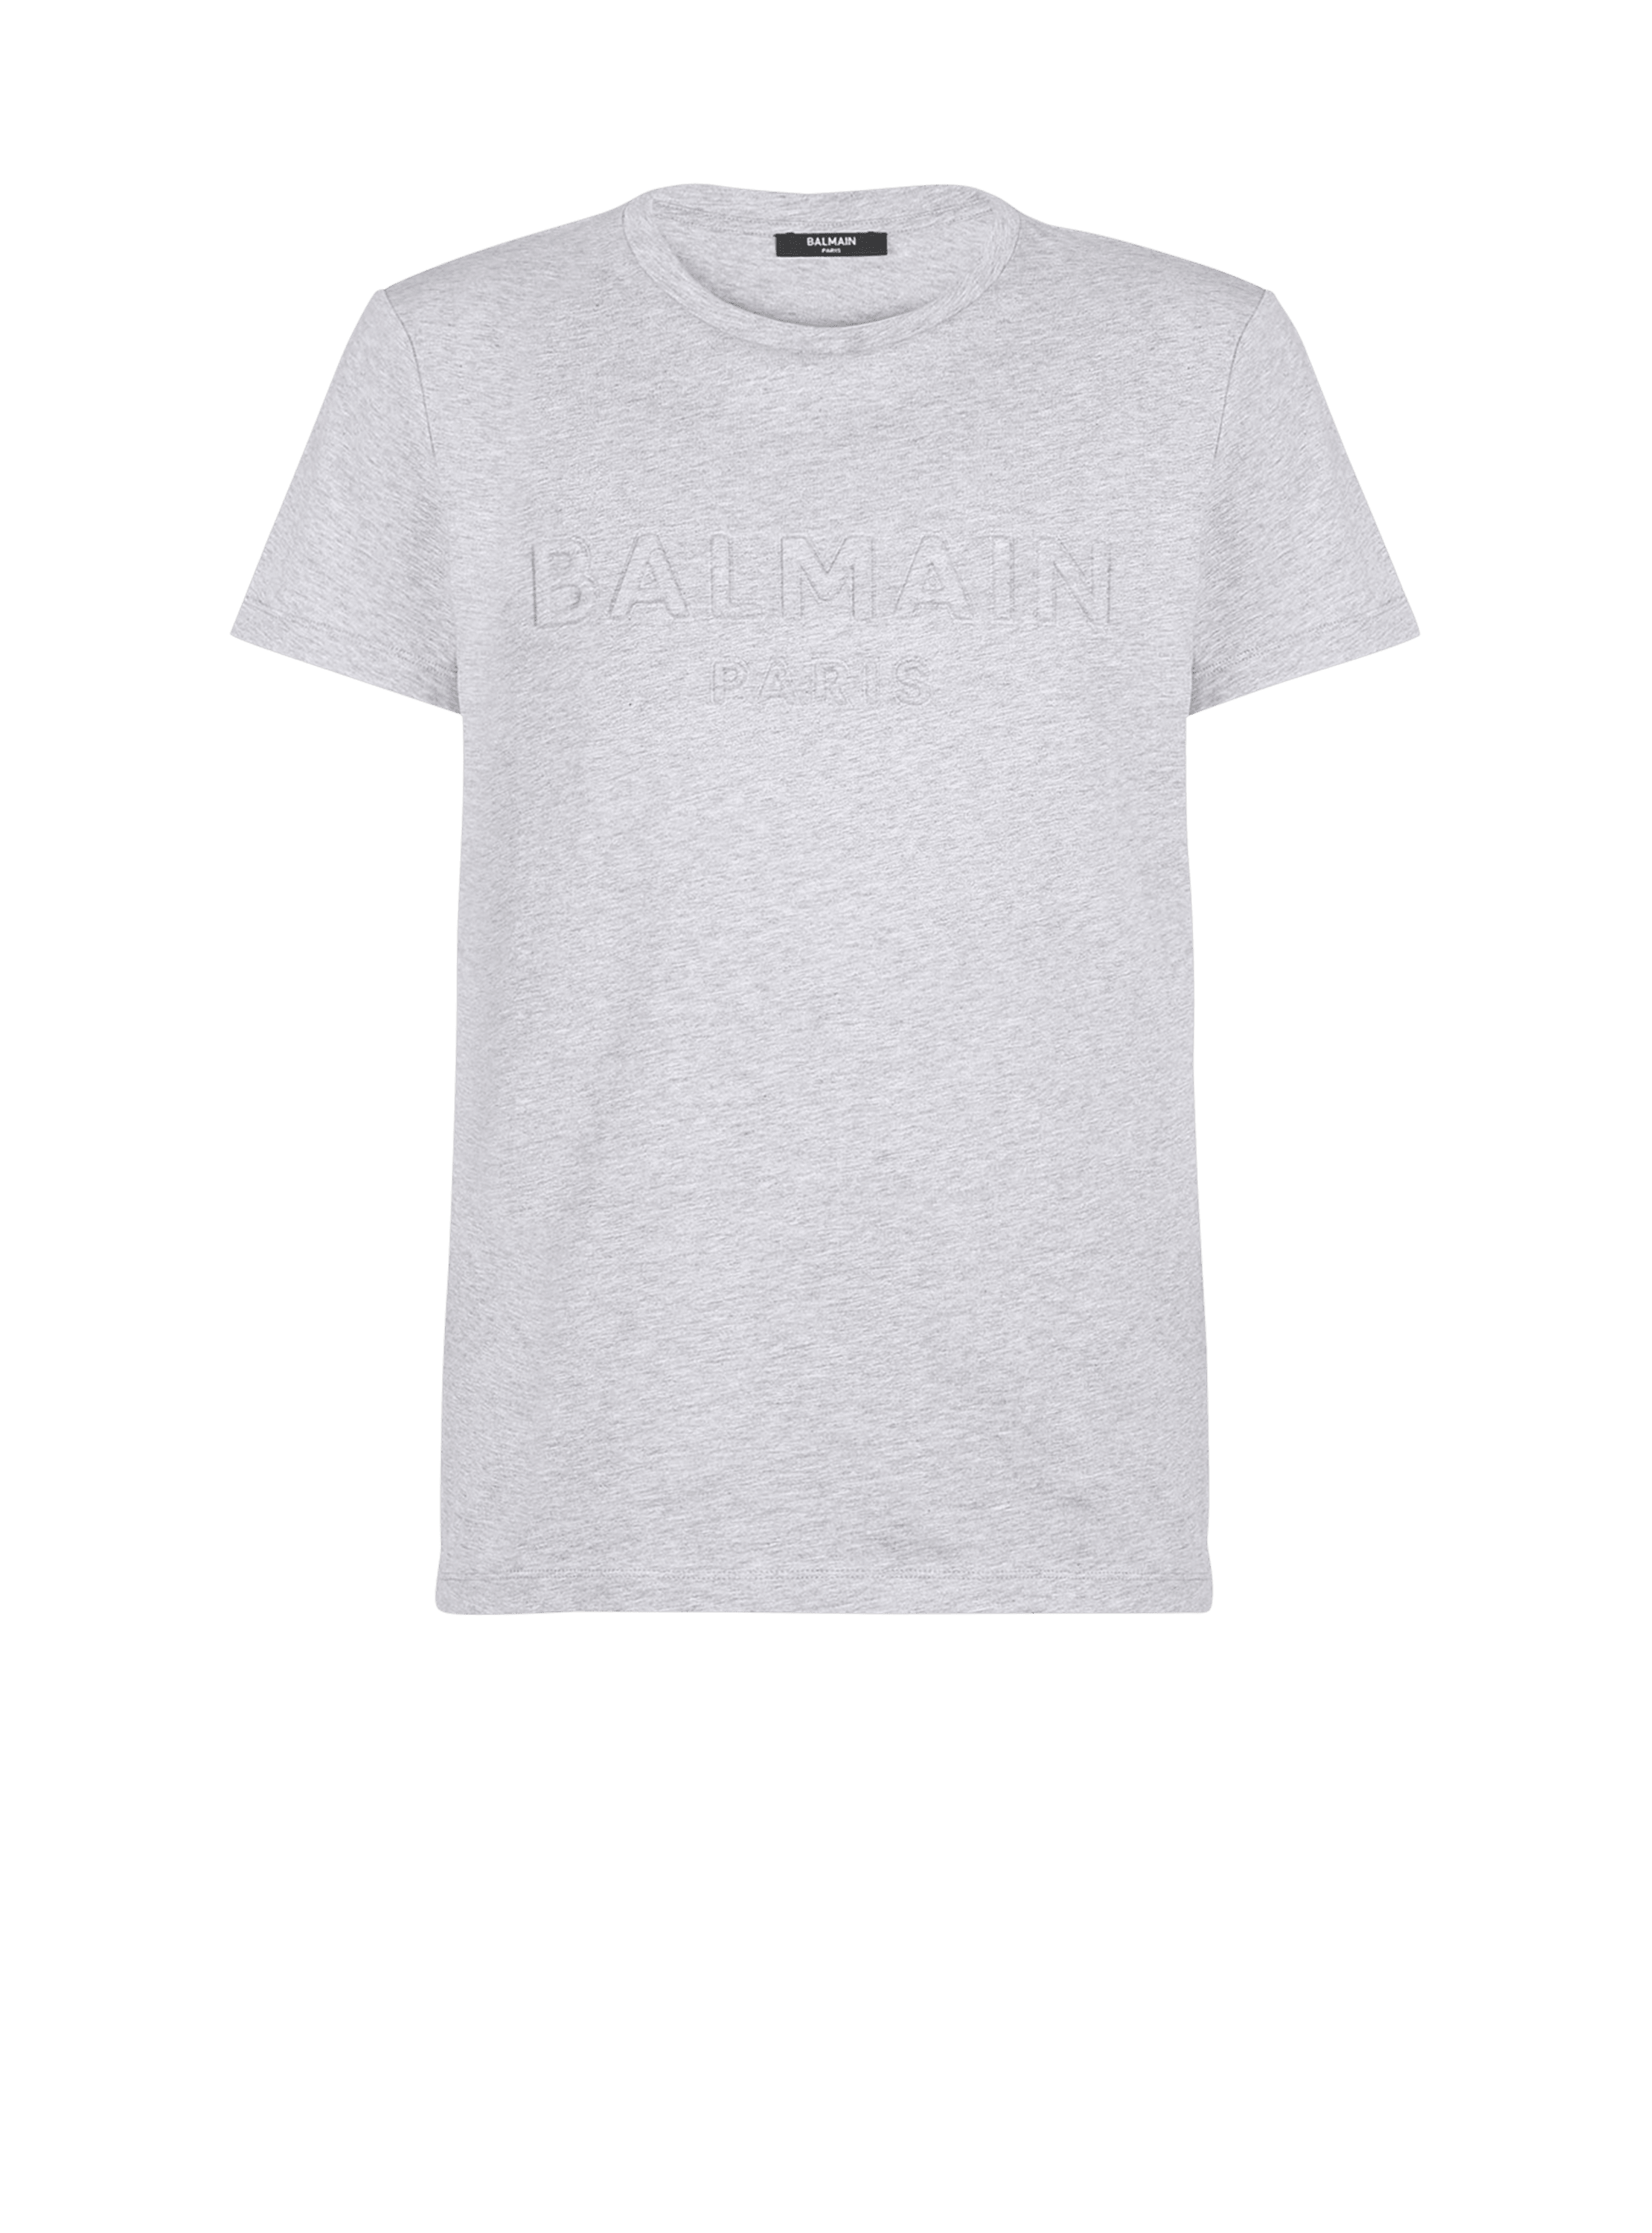 Cotton T-shirt with embossed Balmain Paris logo, grey, hi-res